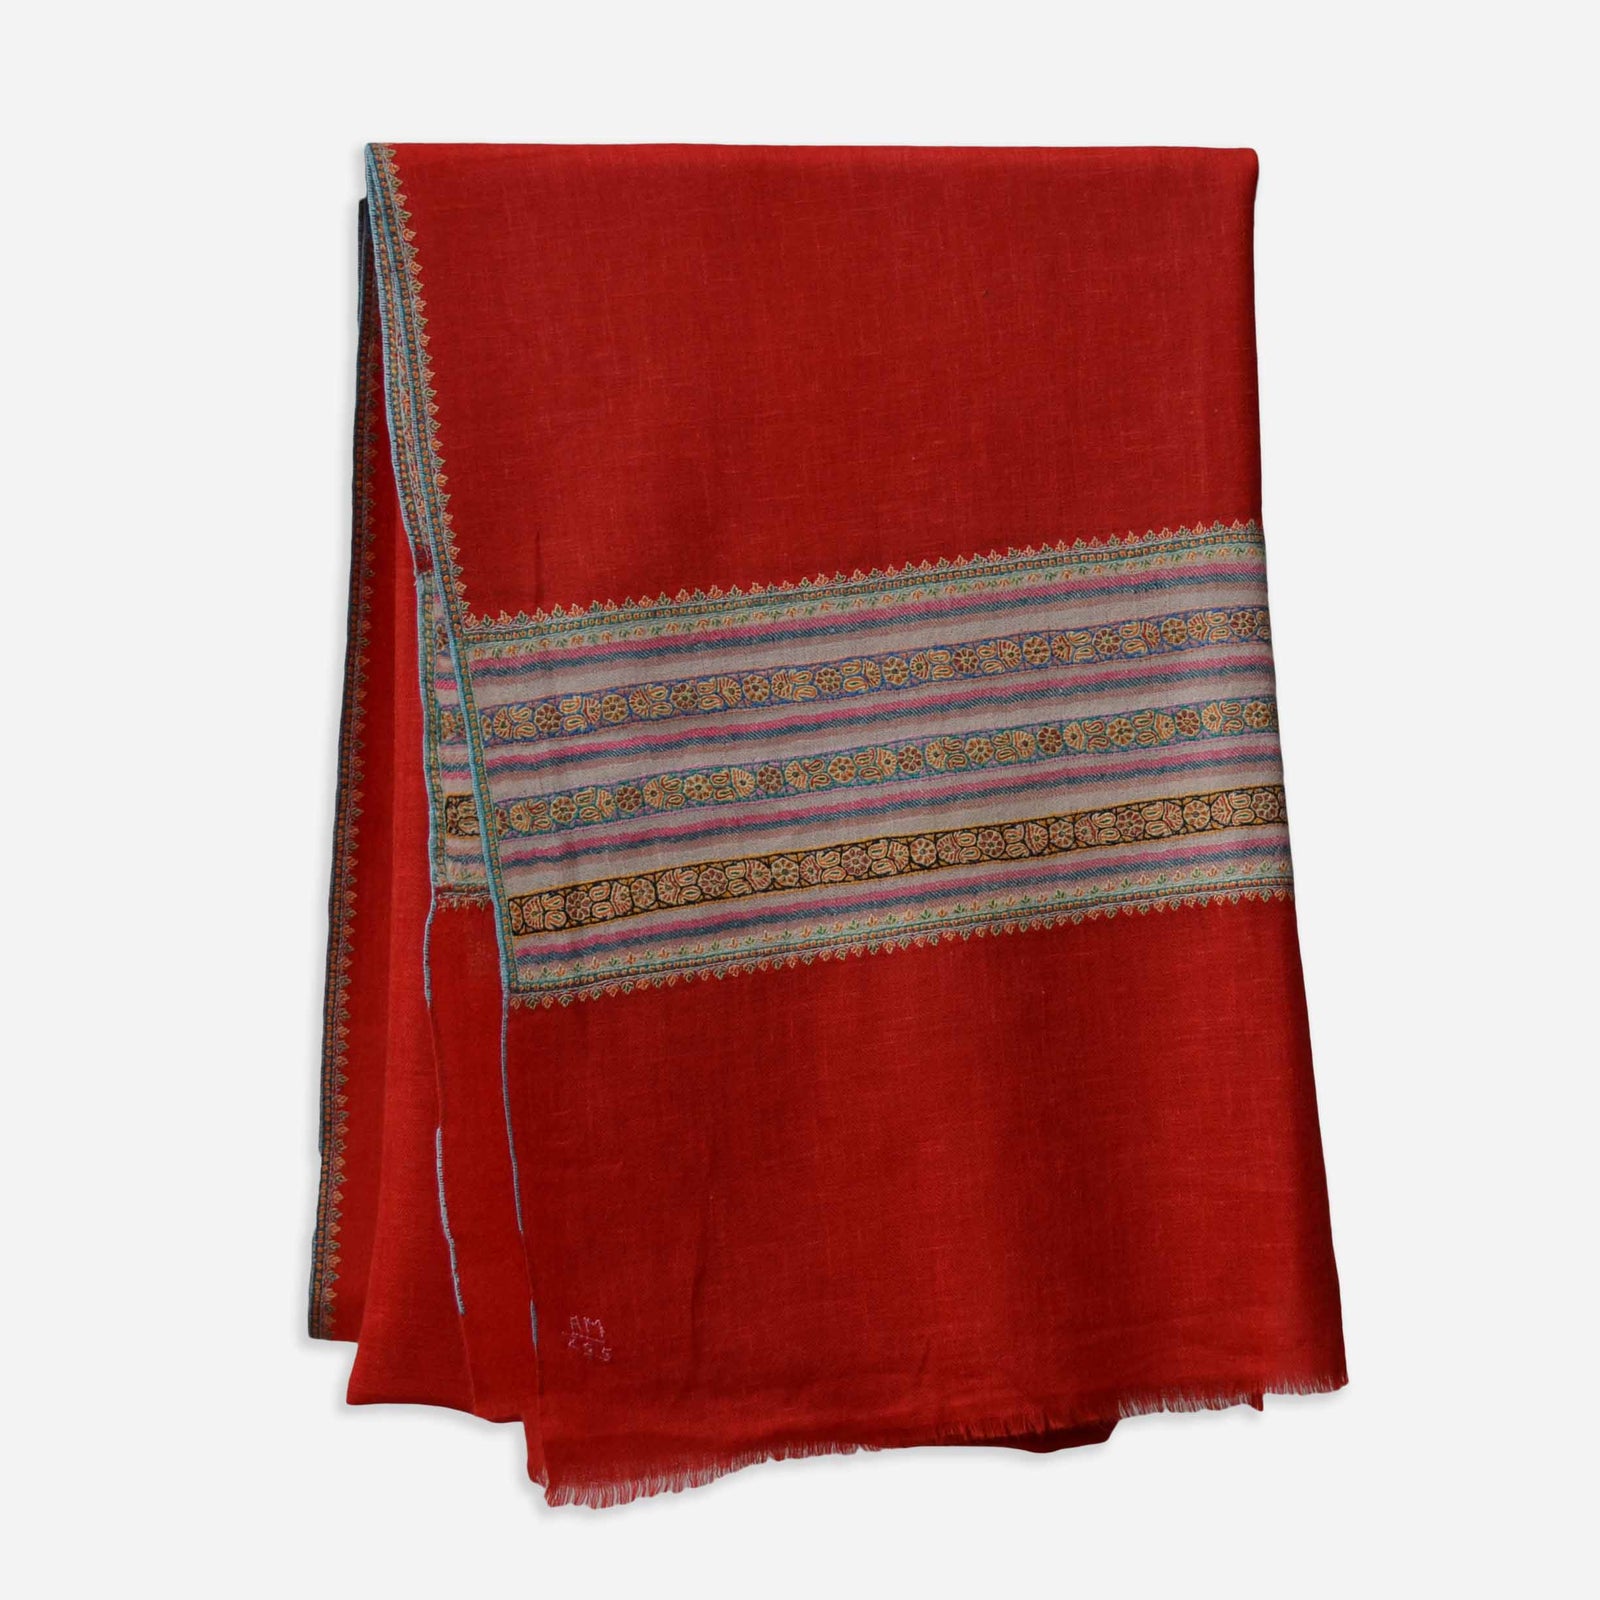 Red Border Embroidery Cashmere Pashmina Shawl